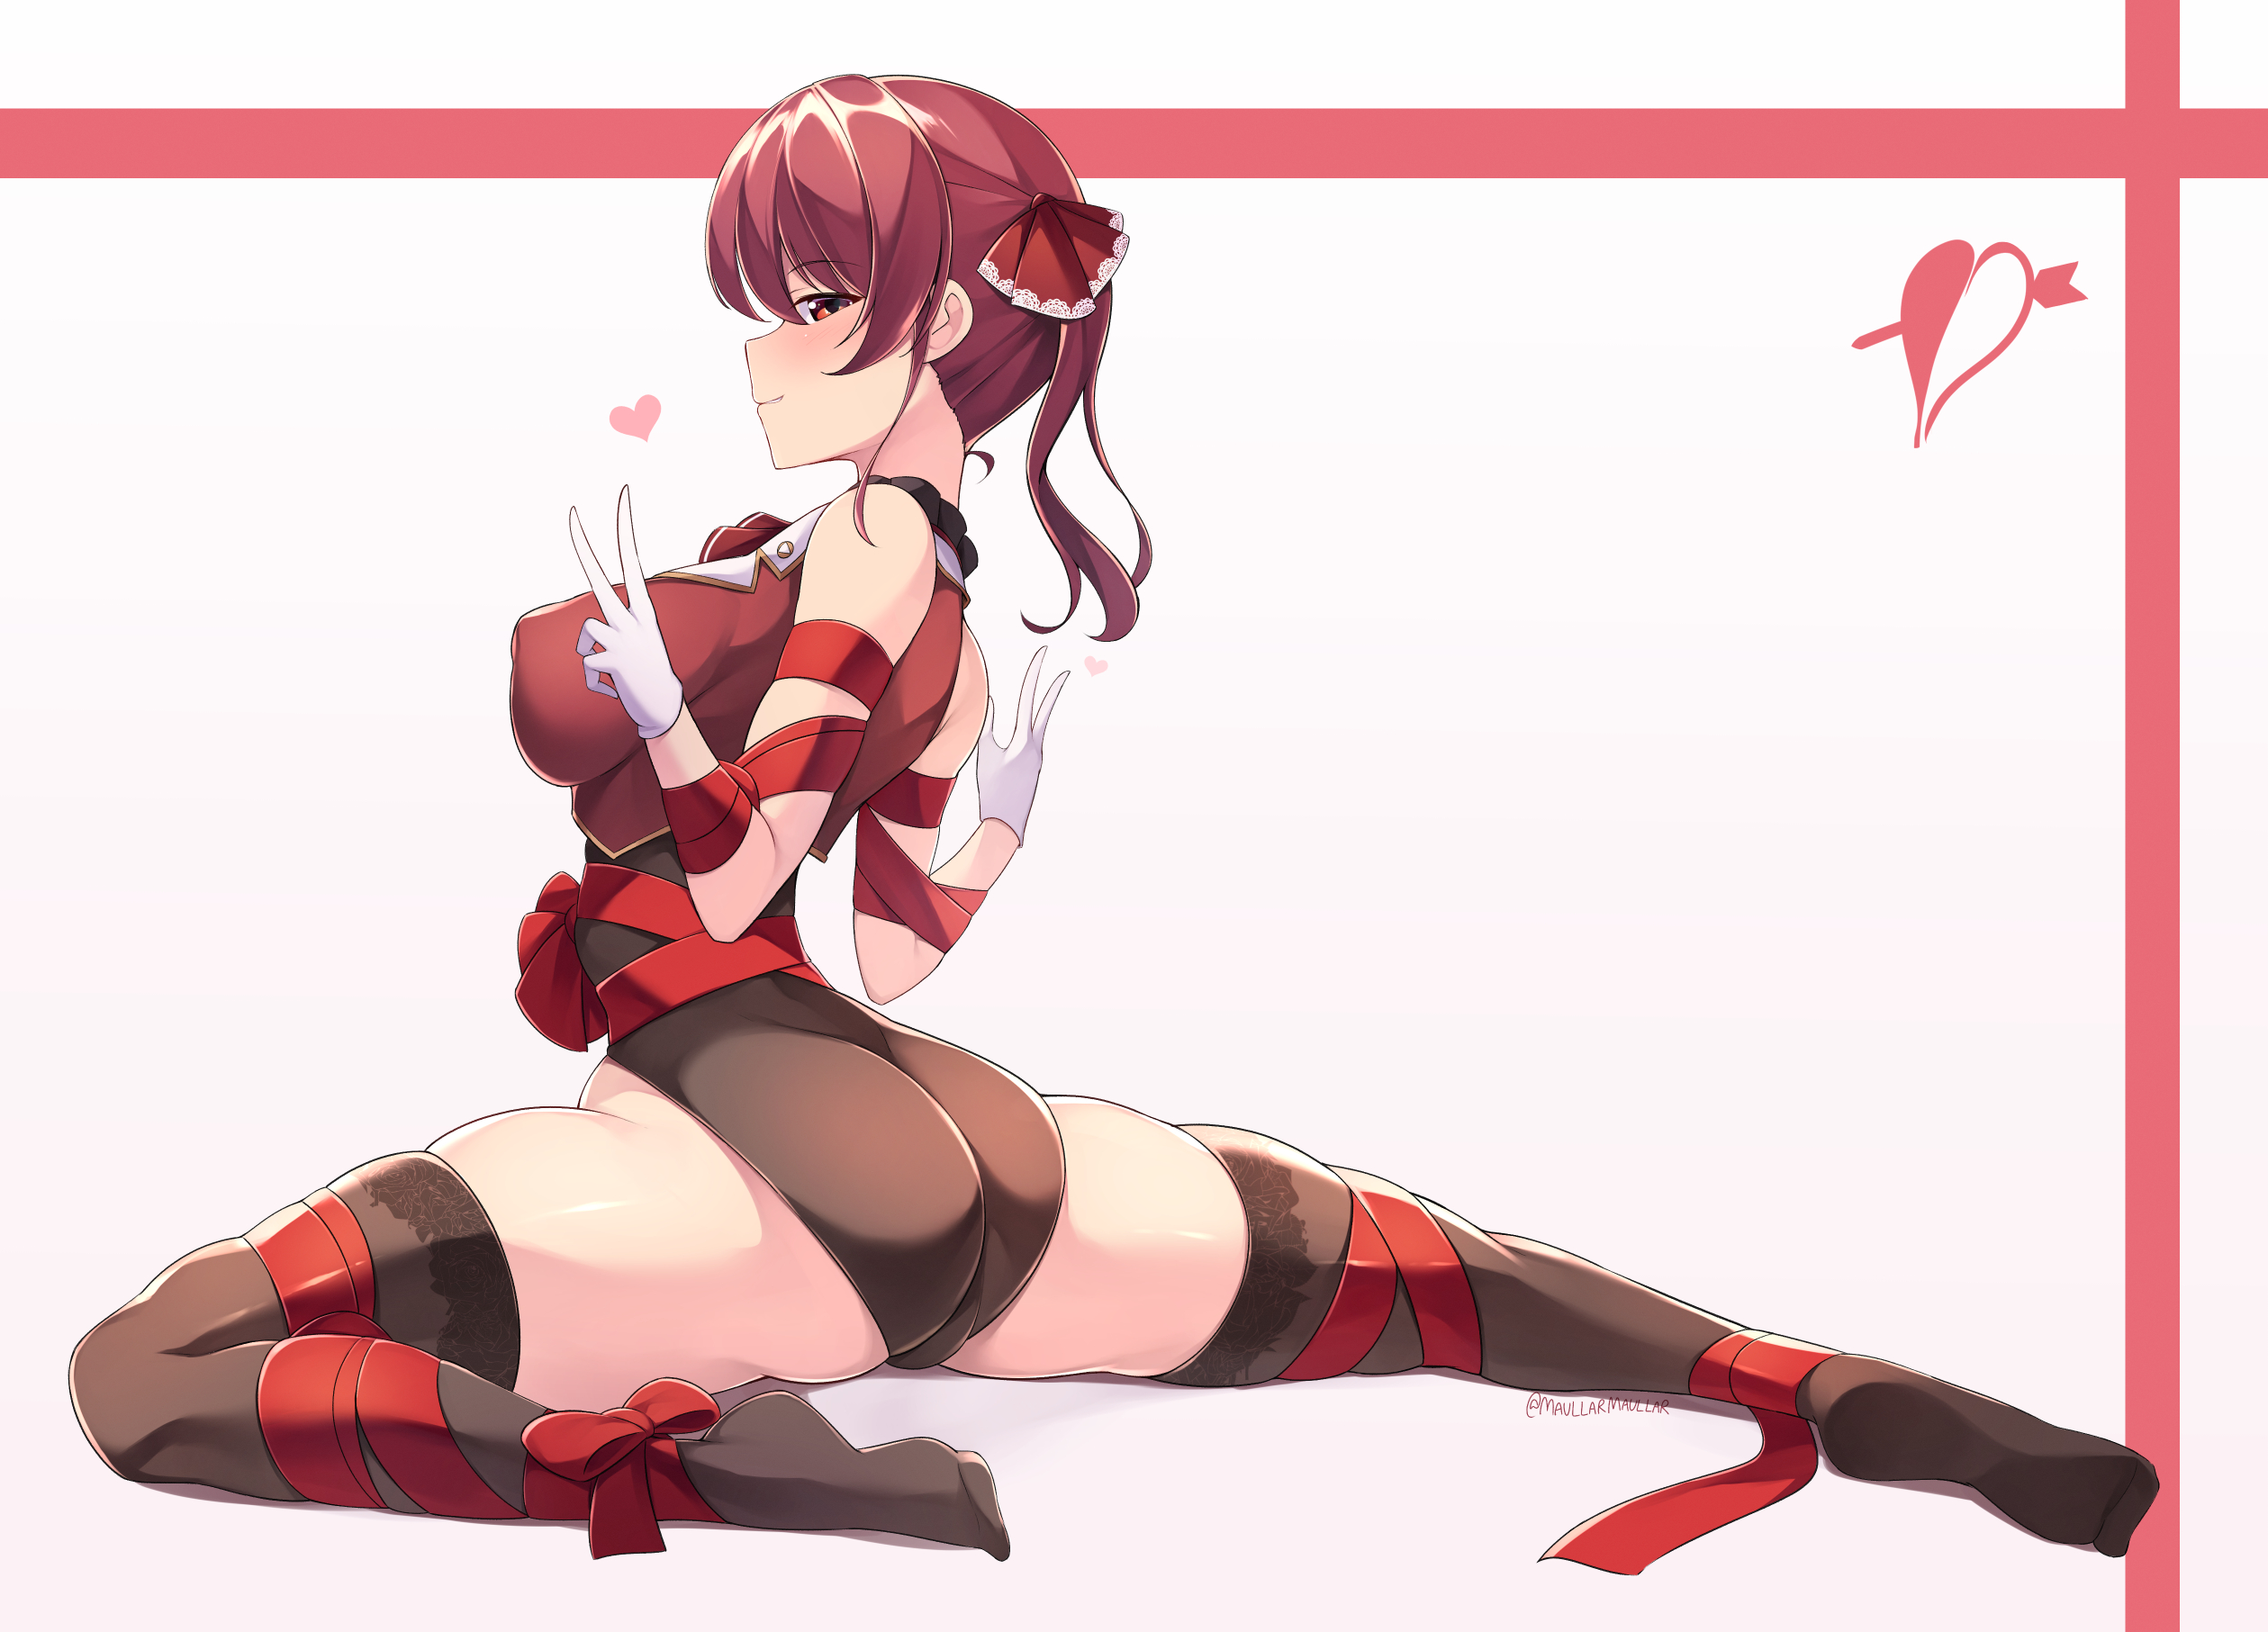 Anime 2519x1813 artwork Hololive Houshou Marine ass flexible redhead red eyes bodysuit stockings red ribbon splits